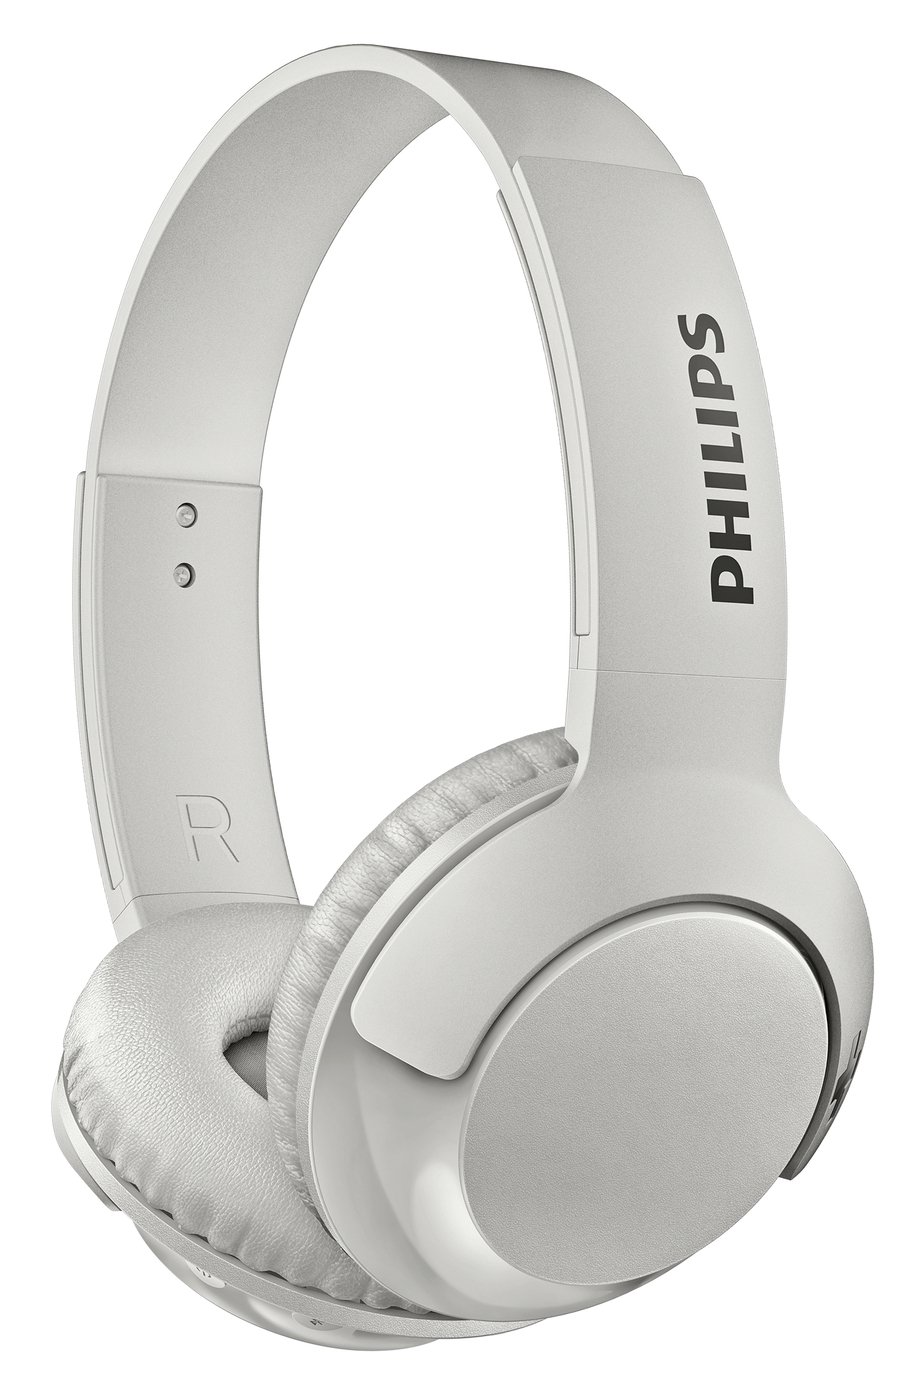 Philips SHB3075 Wireless On-Ear Headphones - White